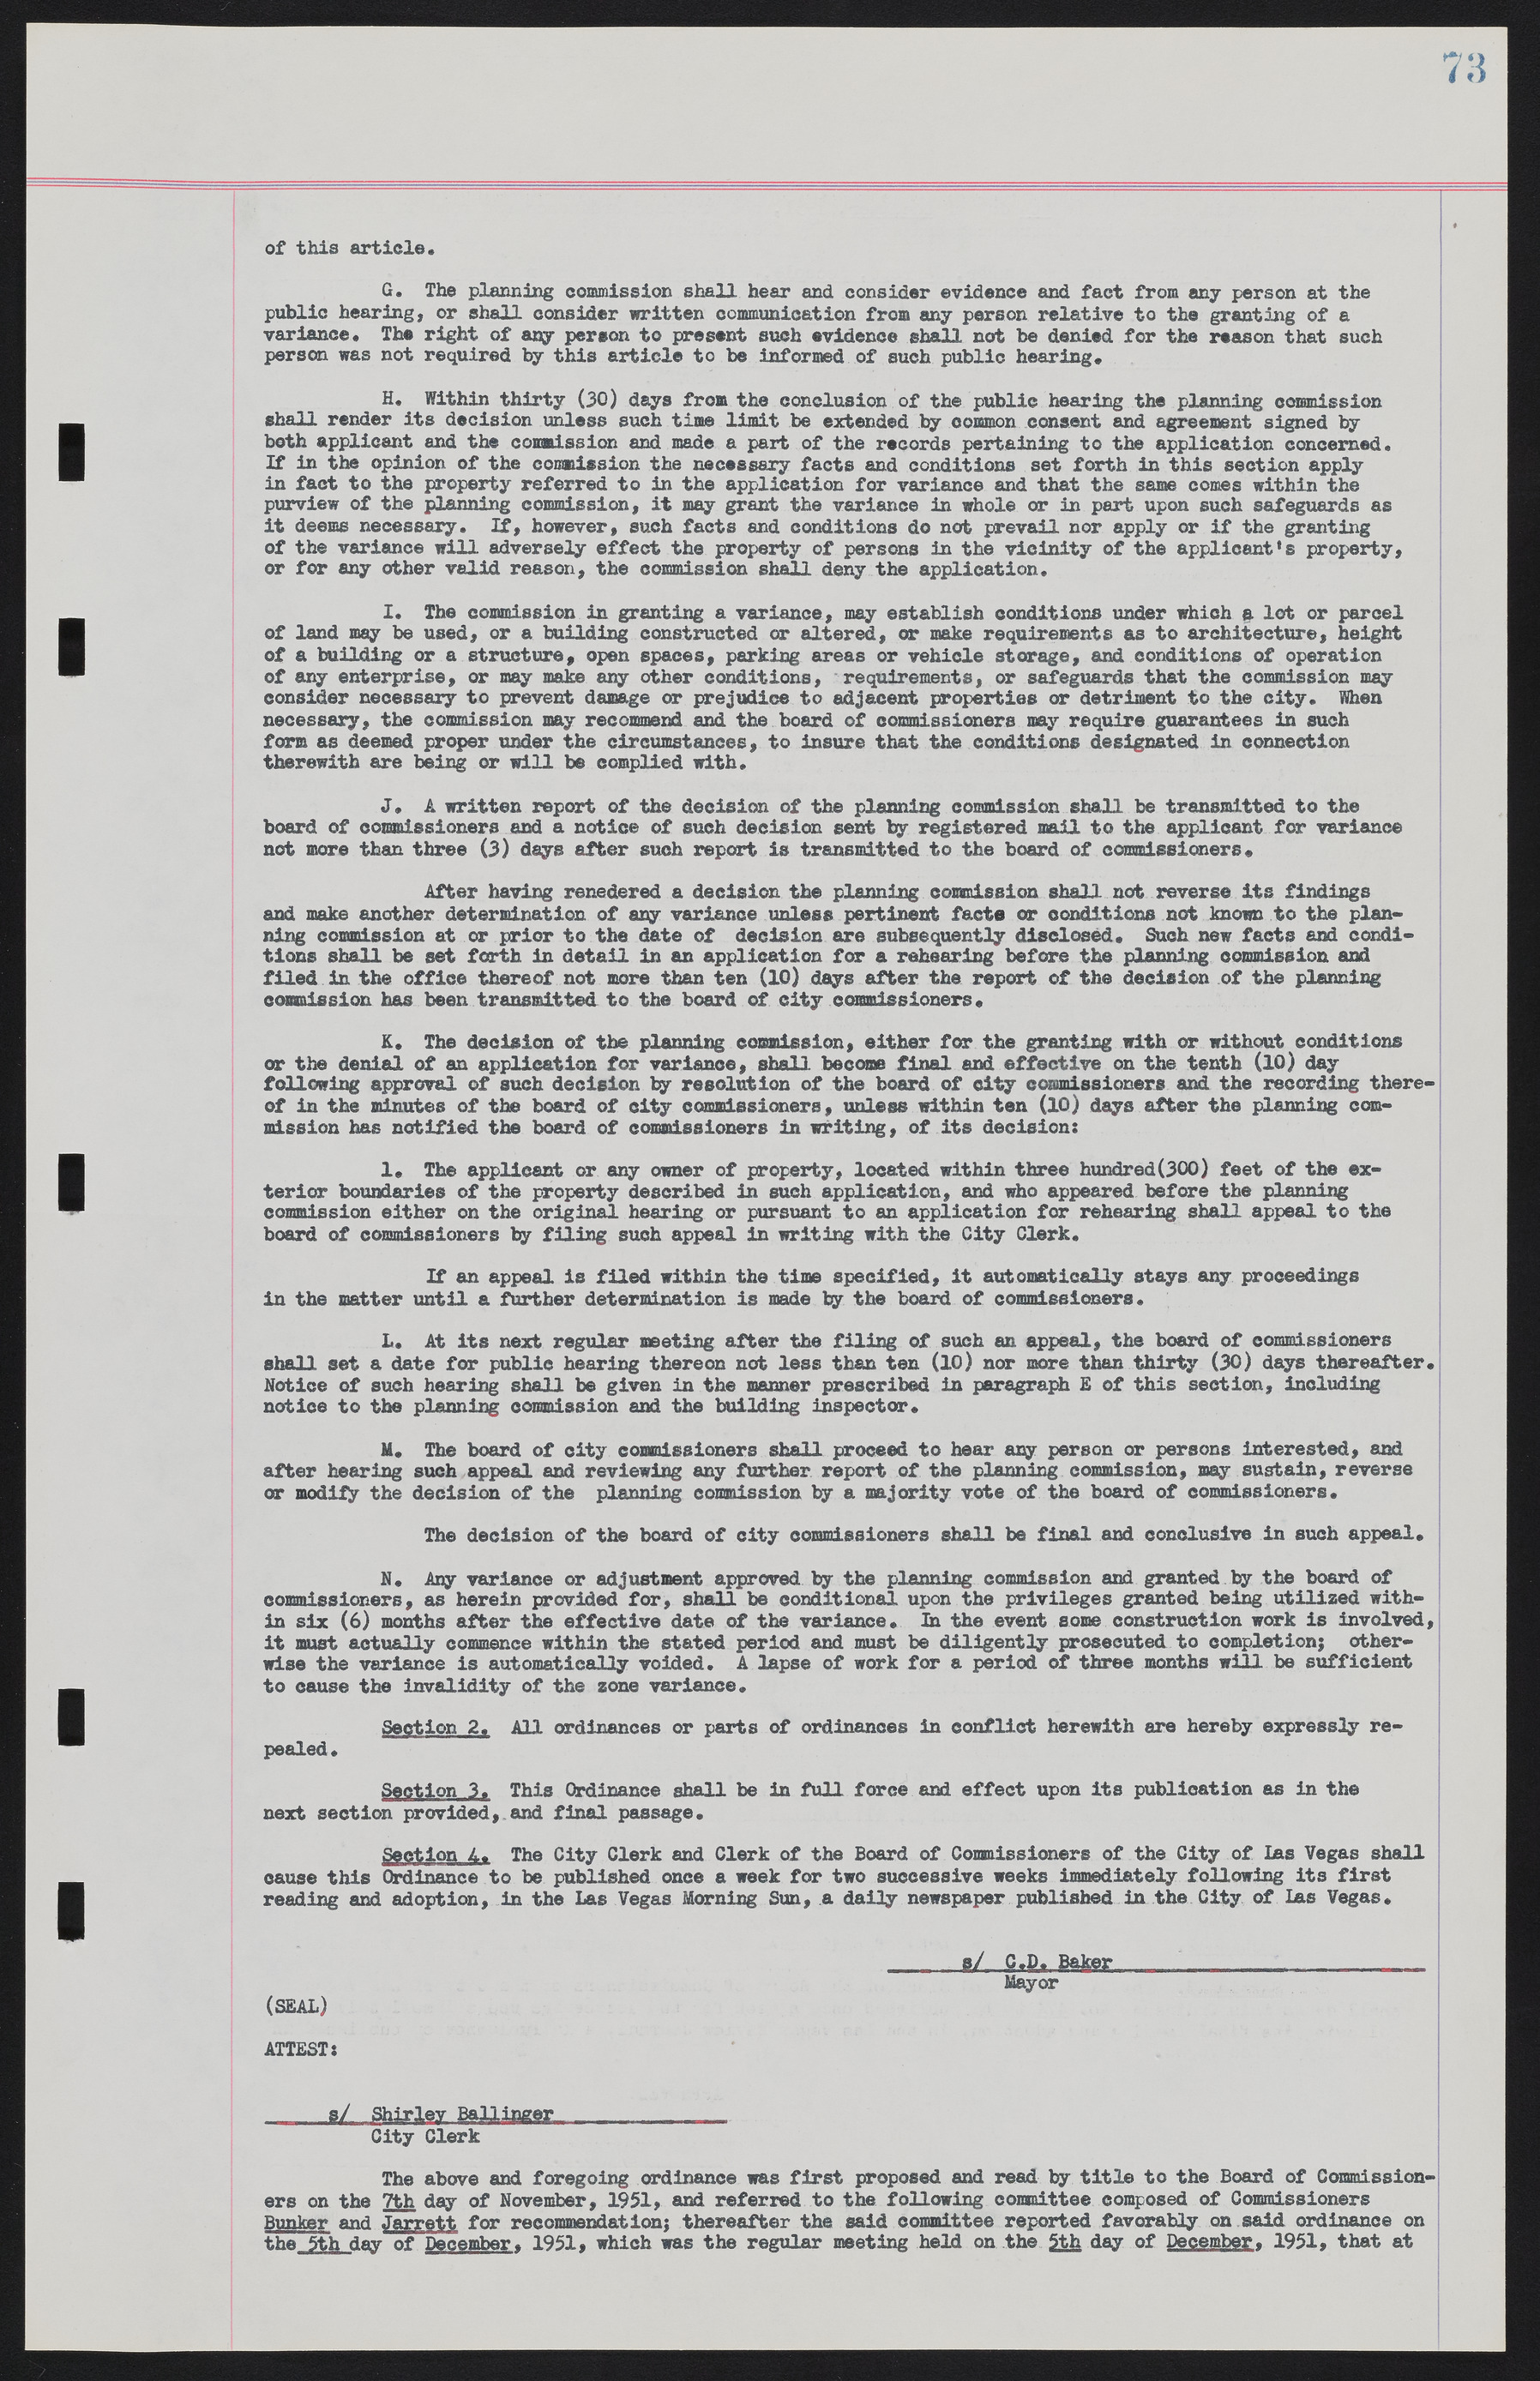 Las Vegas City Ordinances, November 13, 1950 to August 6, 1958, lvc000015-81